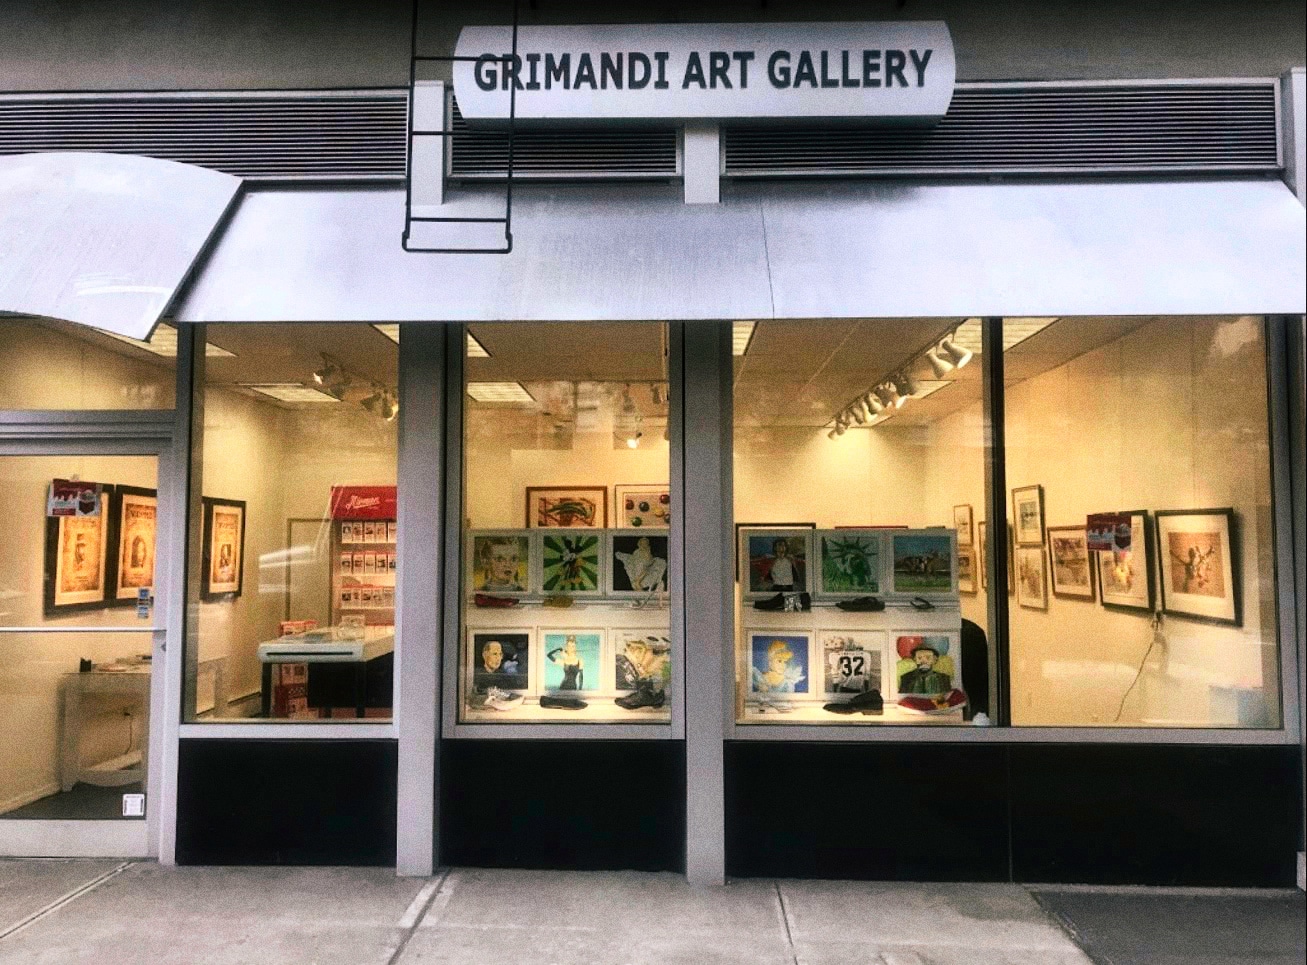 Grimandi Art Gallery